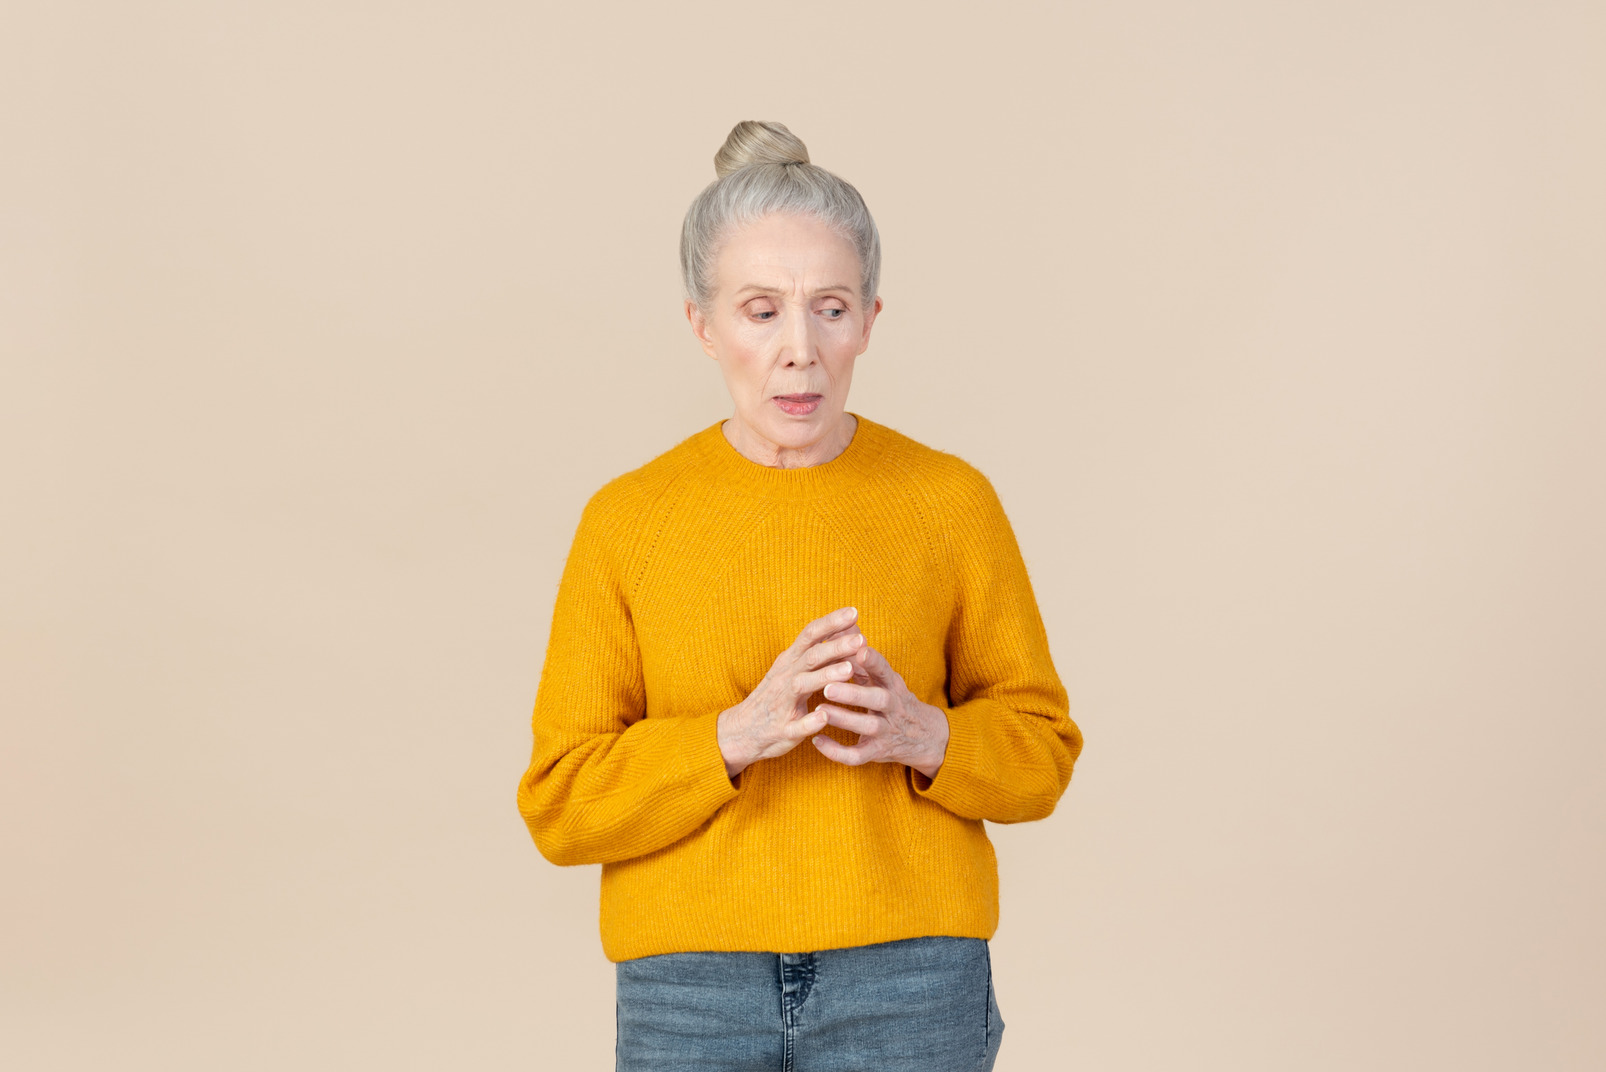 Pensive older woman in a mustard sweater